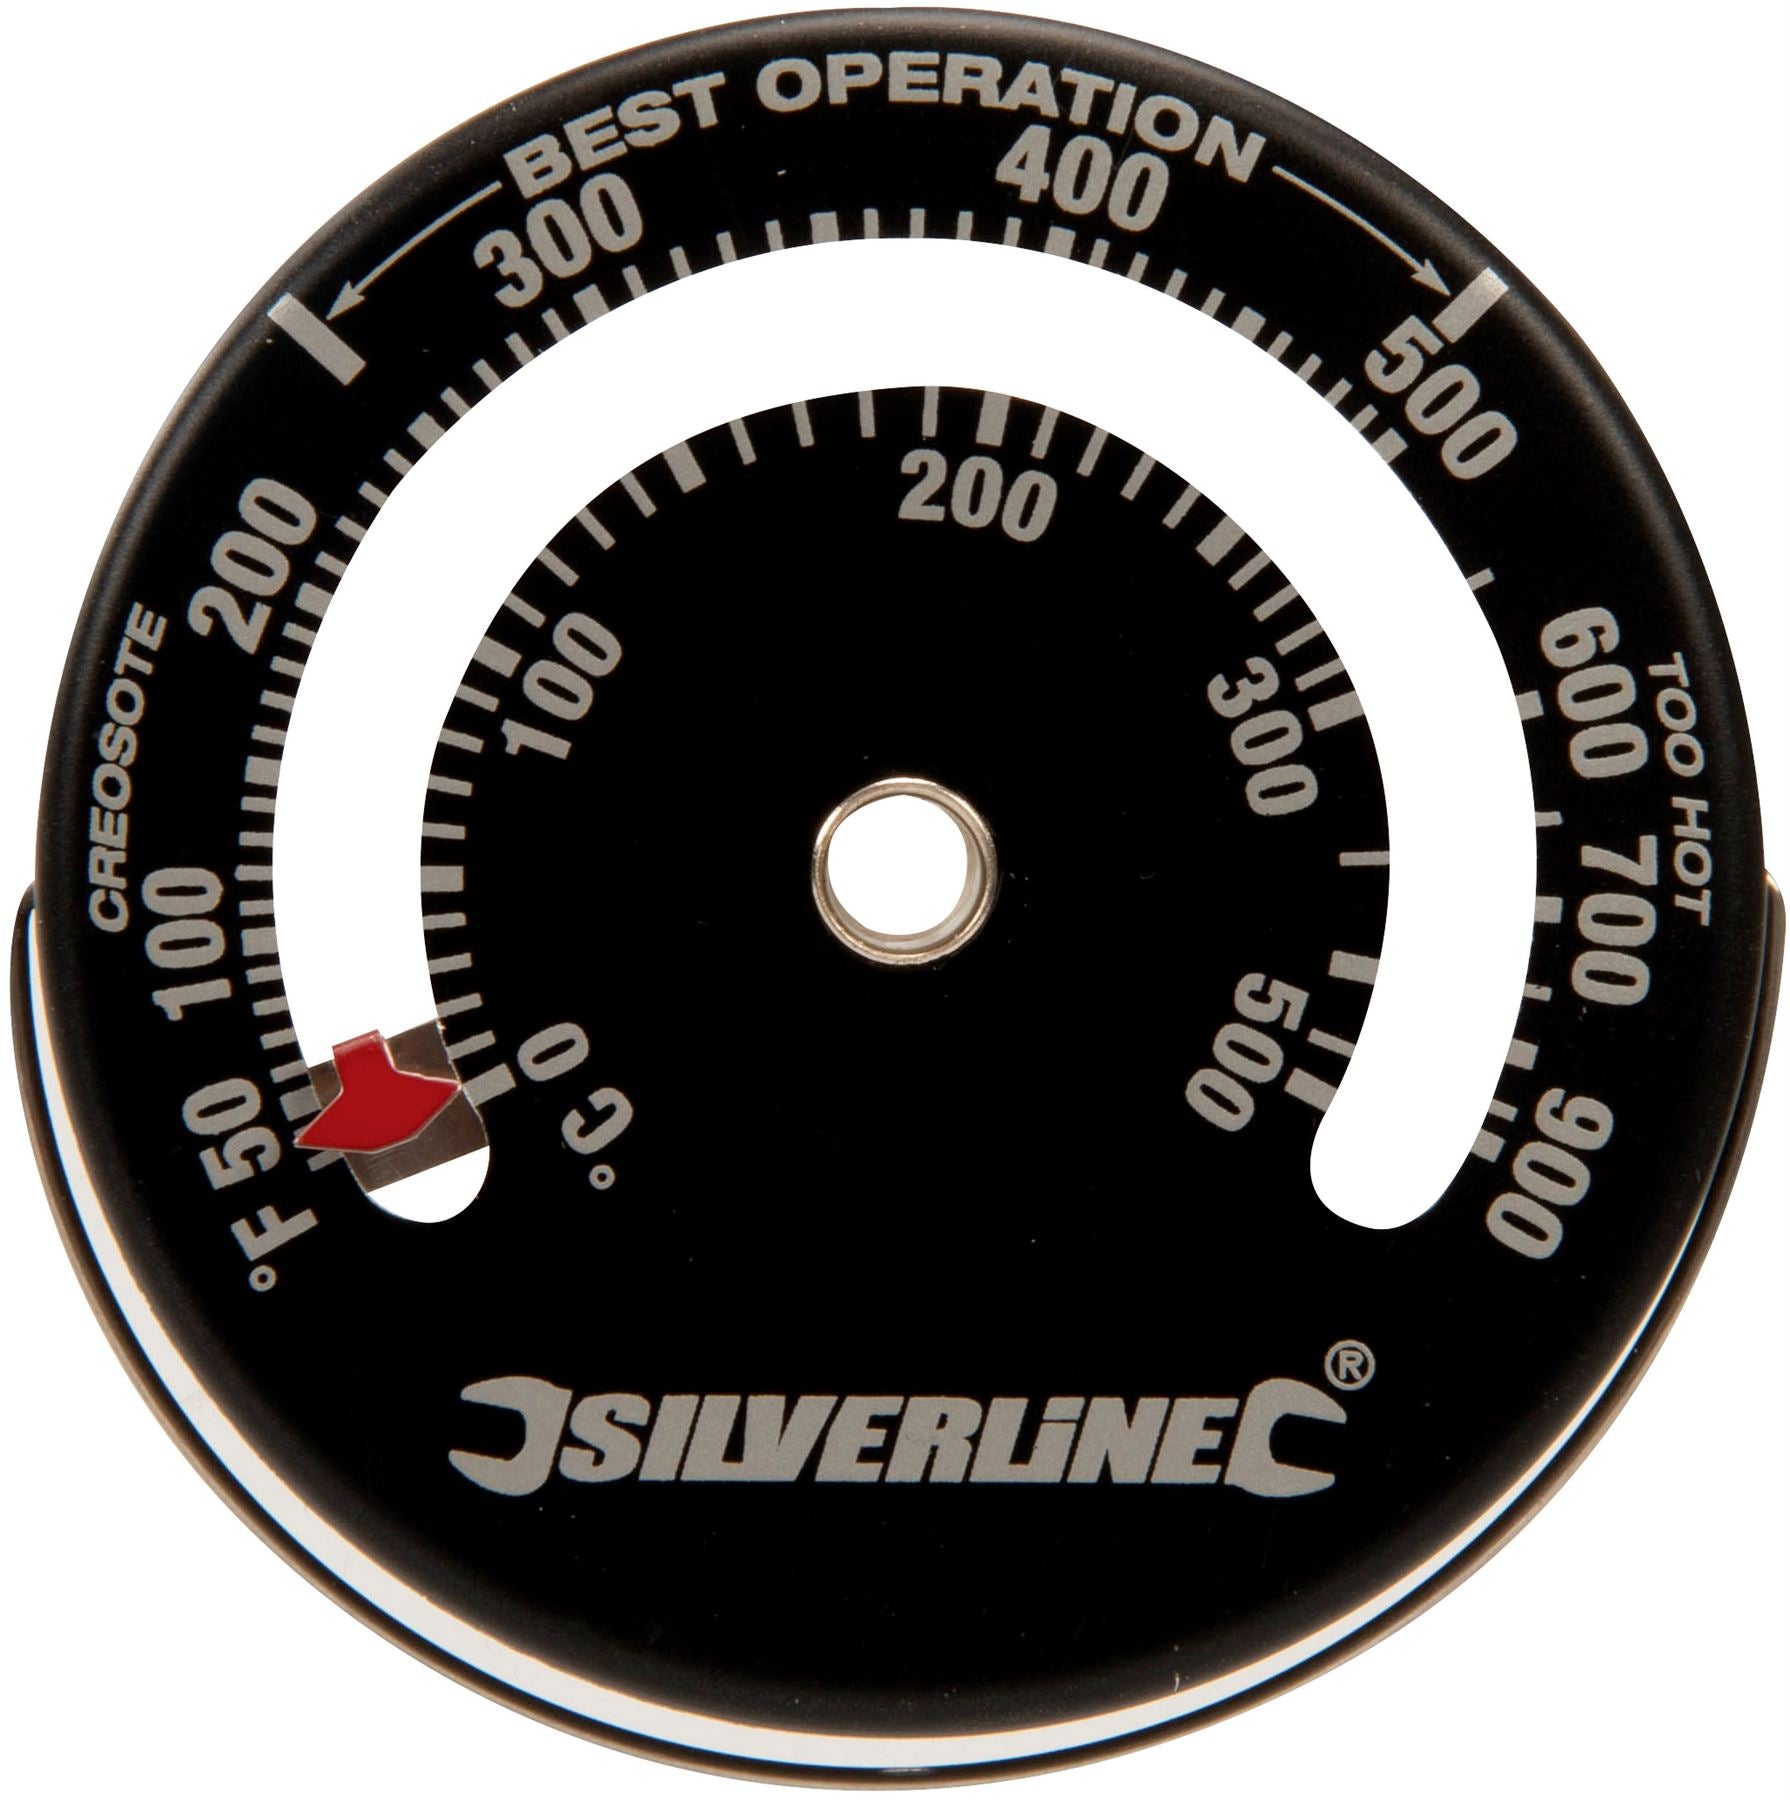 Silverline Magnetic Stove Flue Pipe Thermometer Wood Log Burner 0-500°C